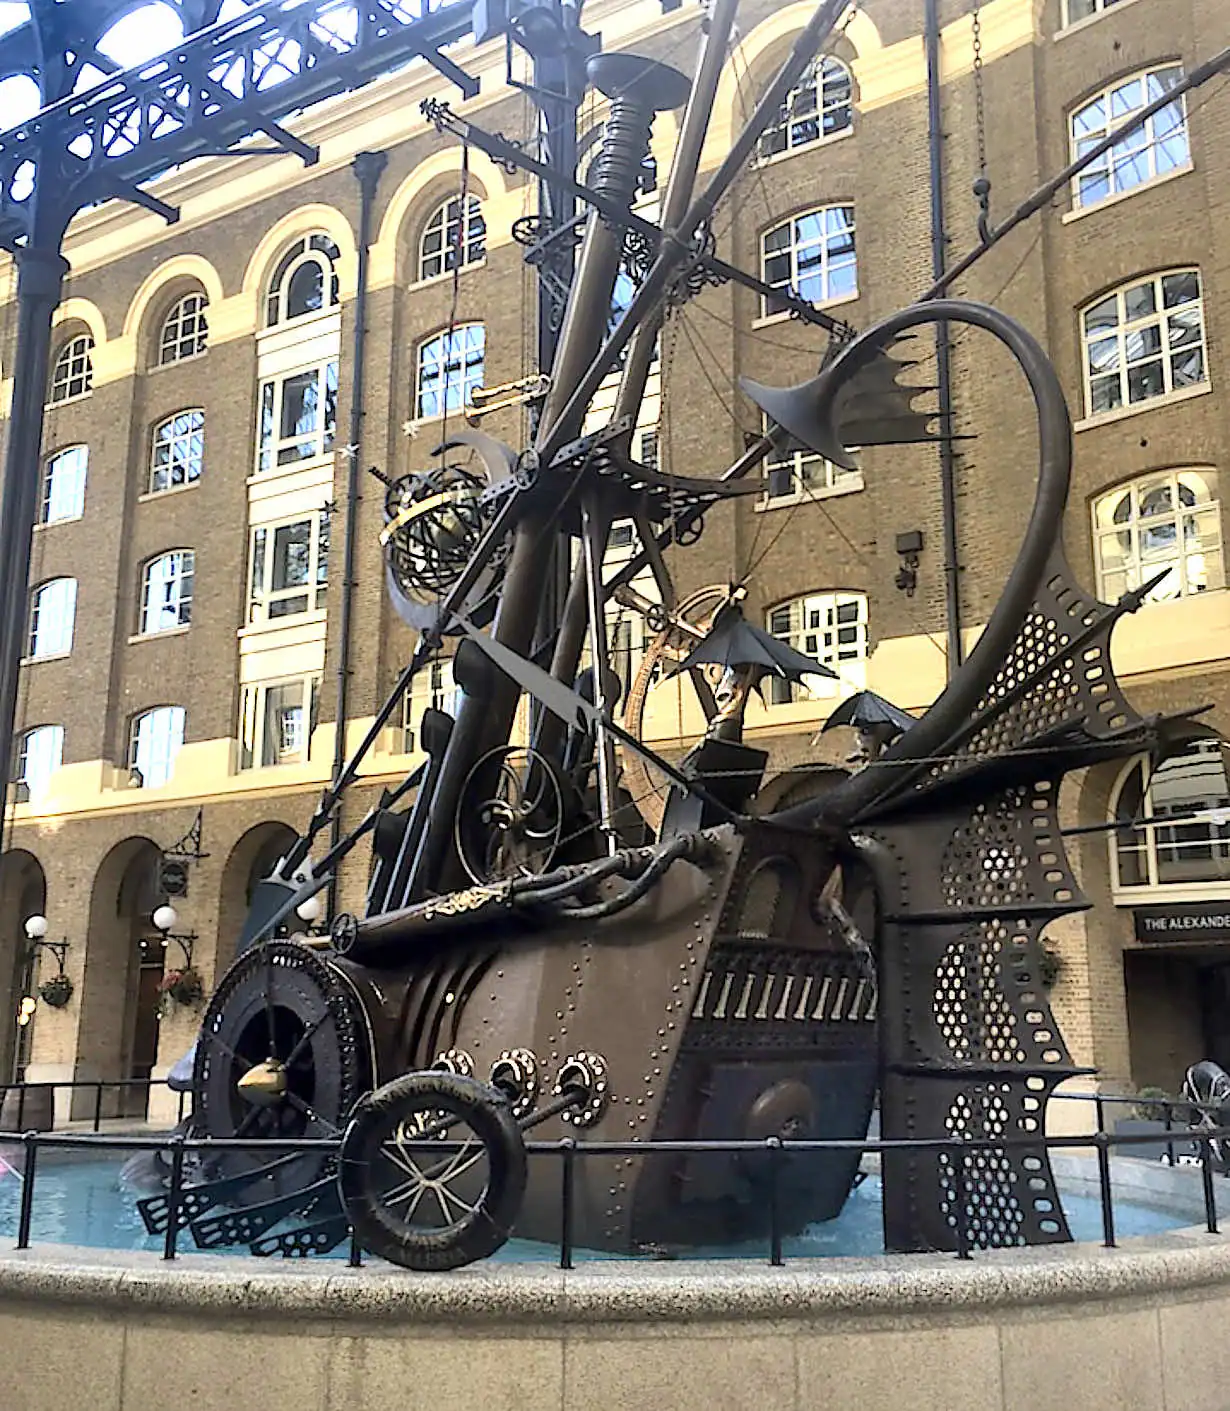 Sculpture of a ship by David Kemp, called The Navigators